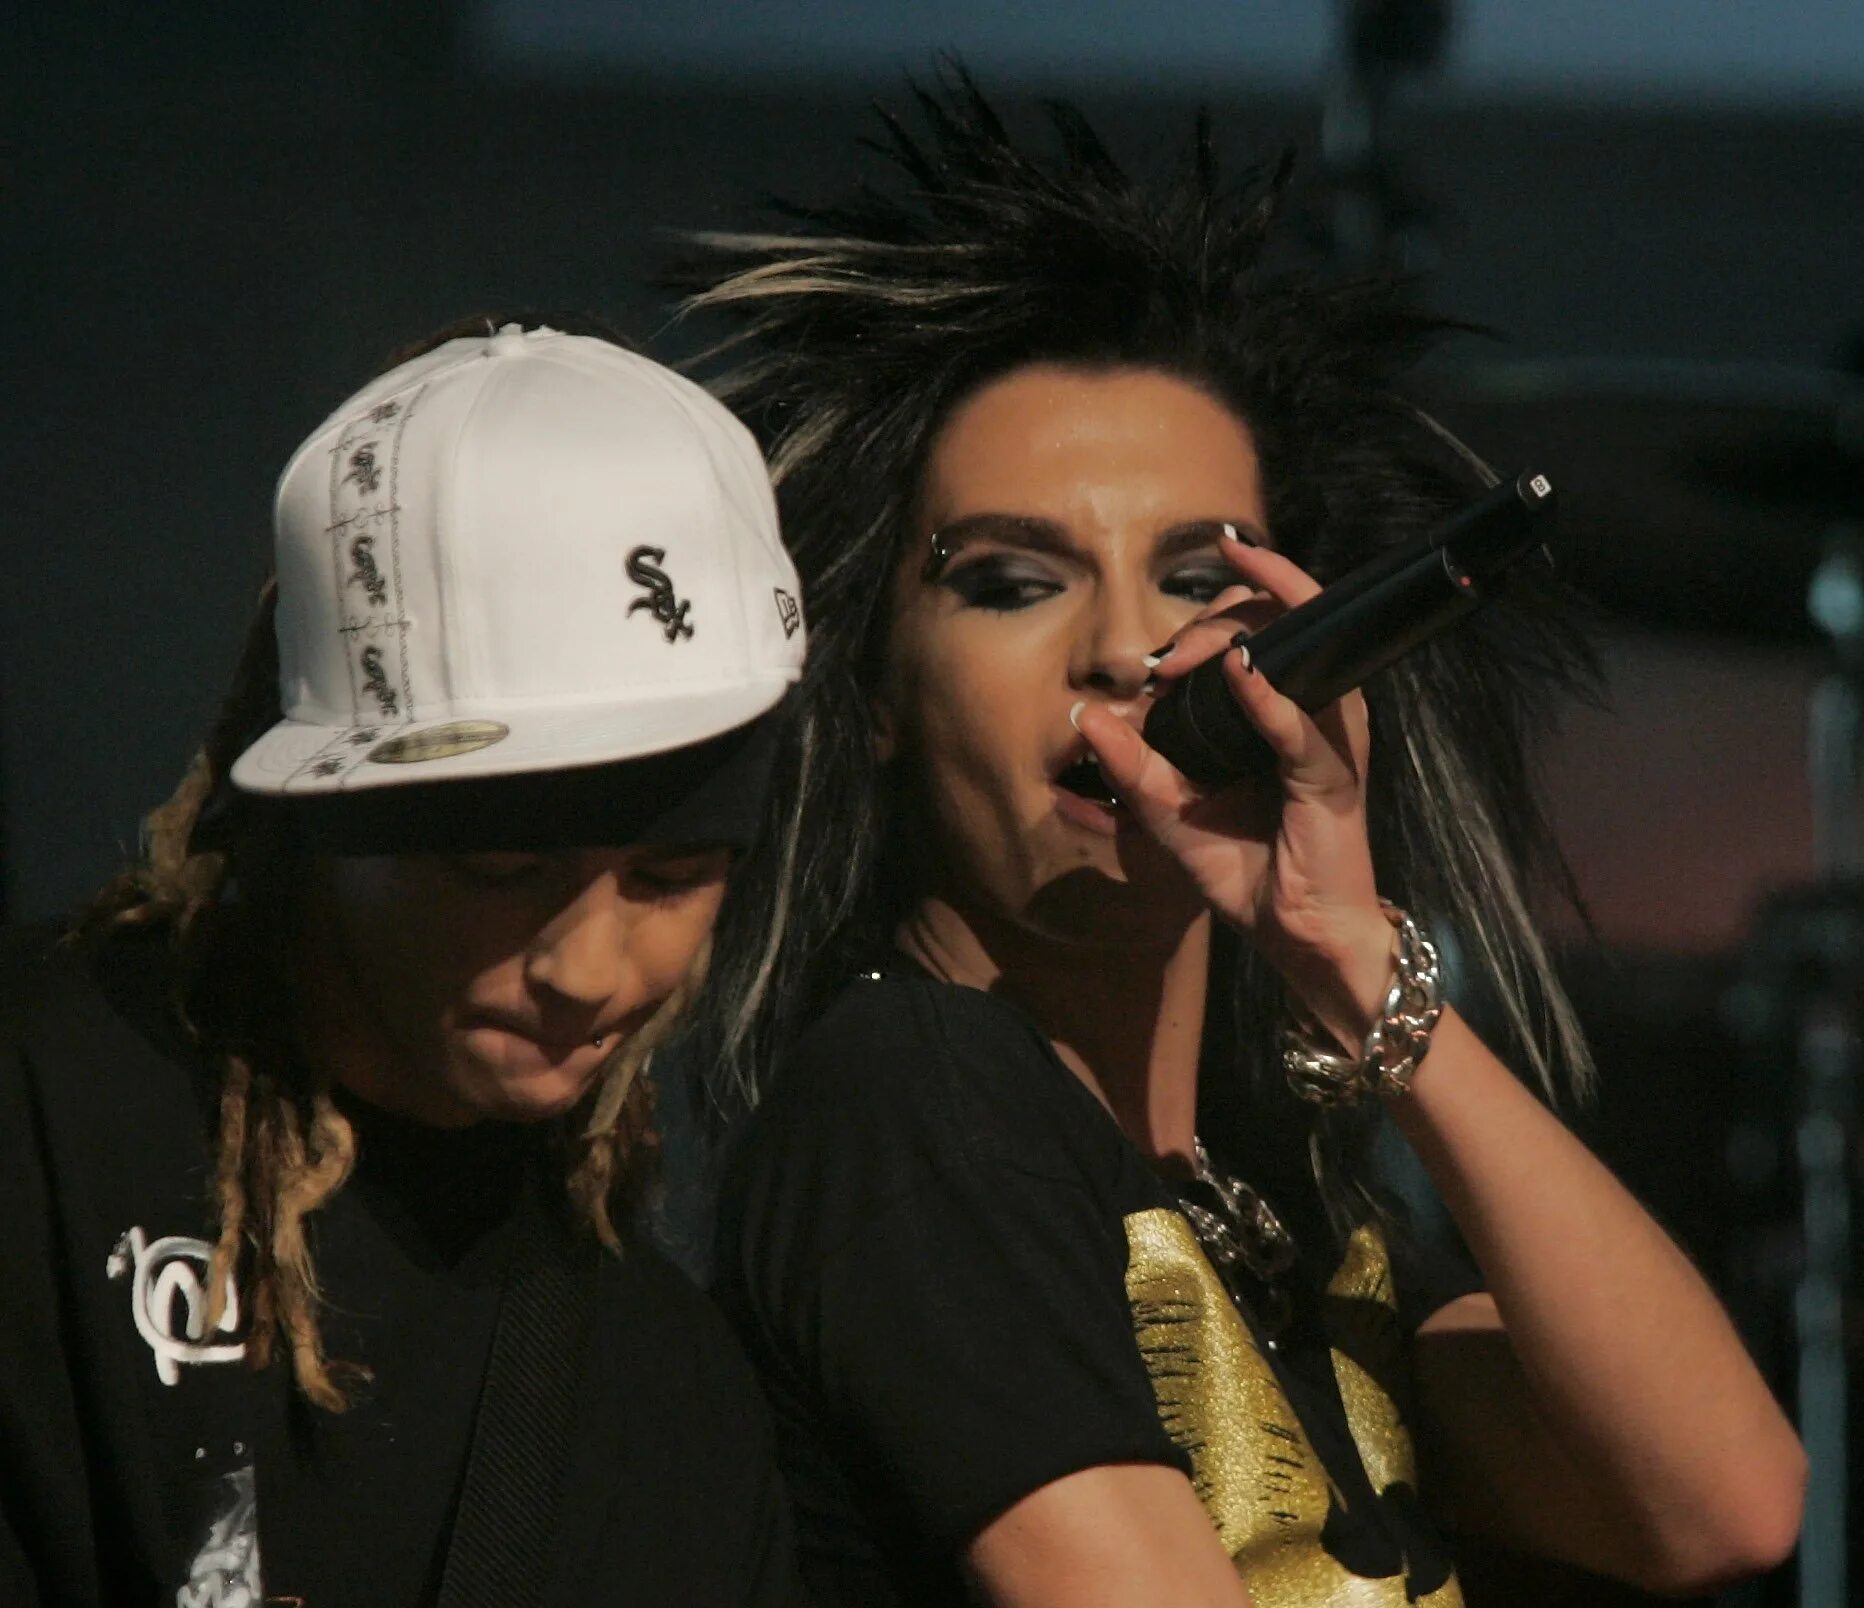 Tom and bill. Билл и том Каулитц. Tokio Hotel 2007 том Каулитц. Tokio Hotel Bill 2007. Tokio Hotel Билл и том.